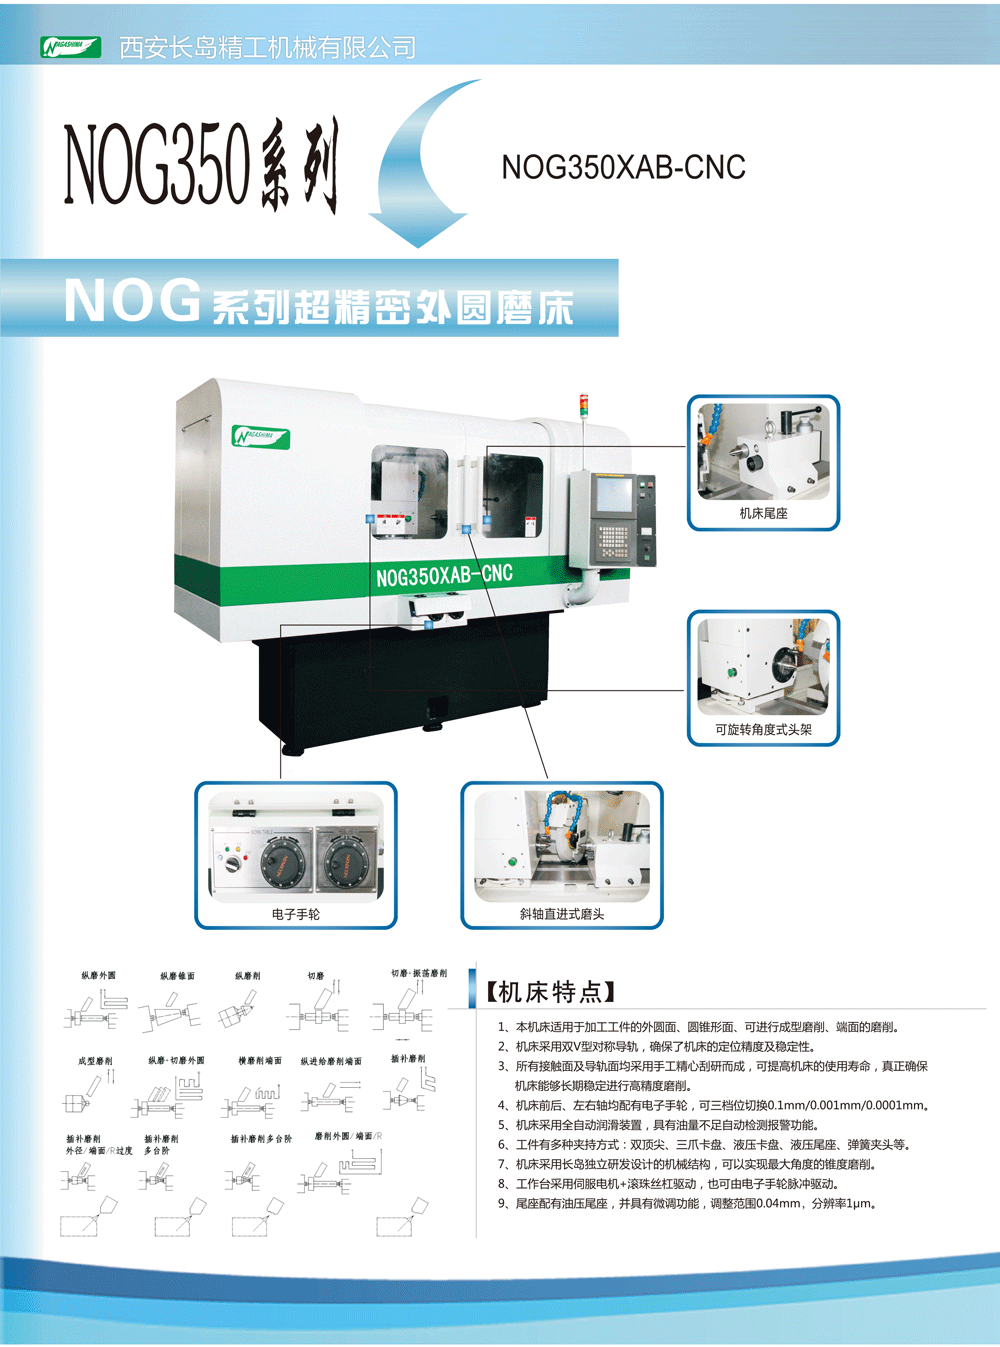 NOG350XAB-CNC